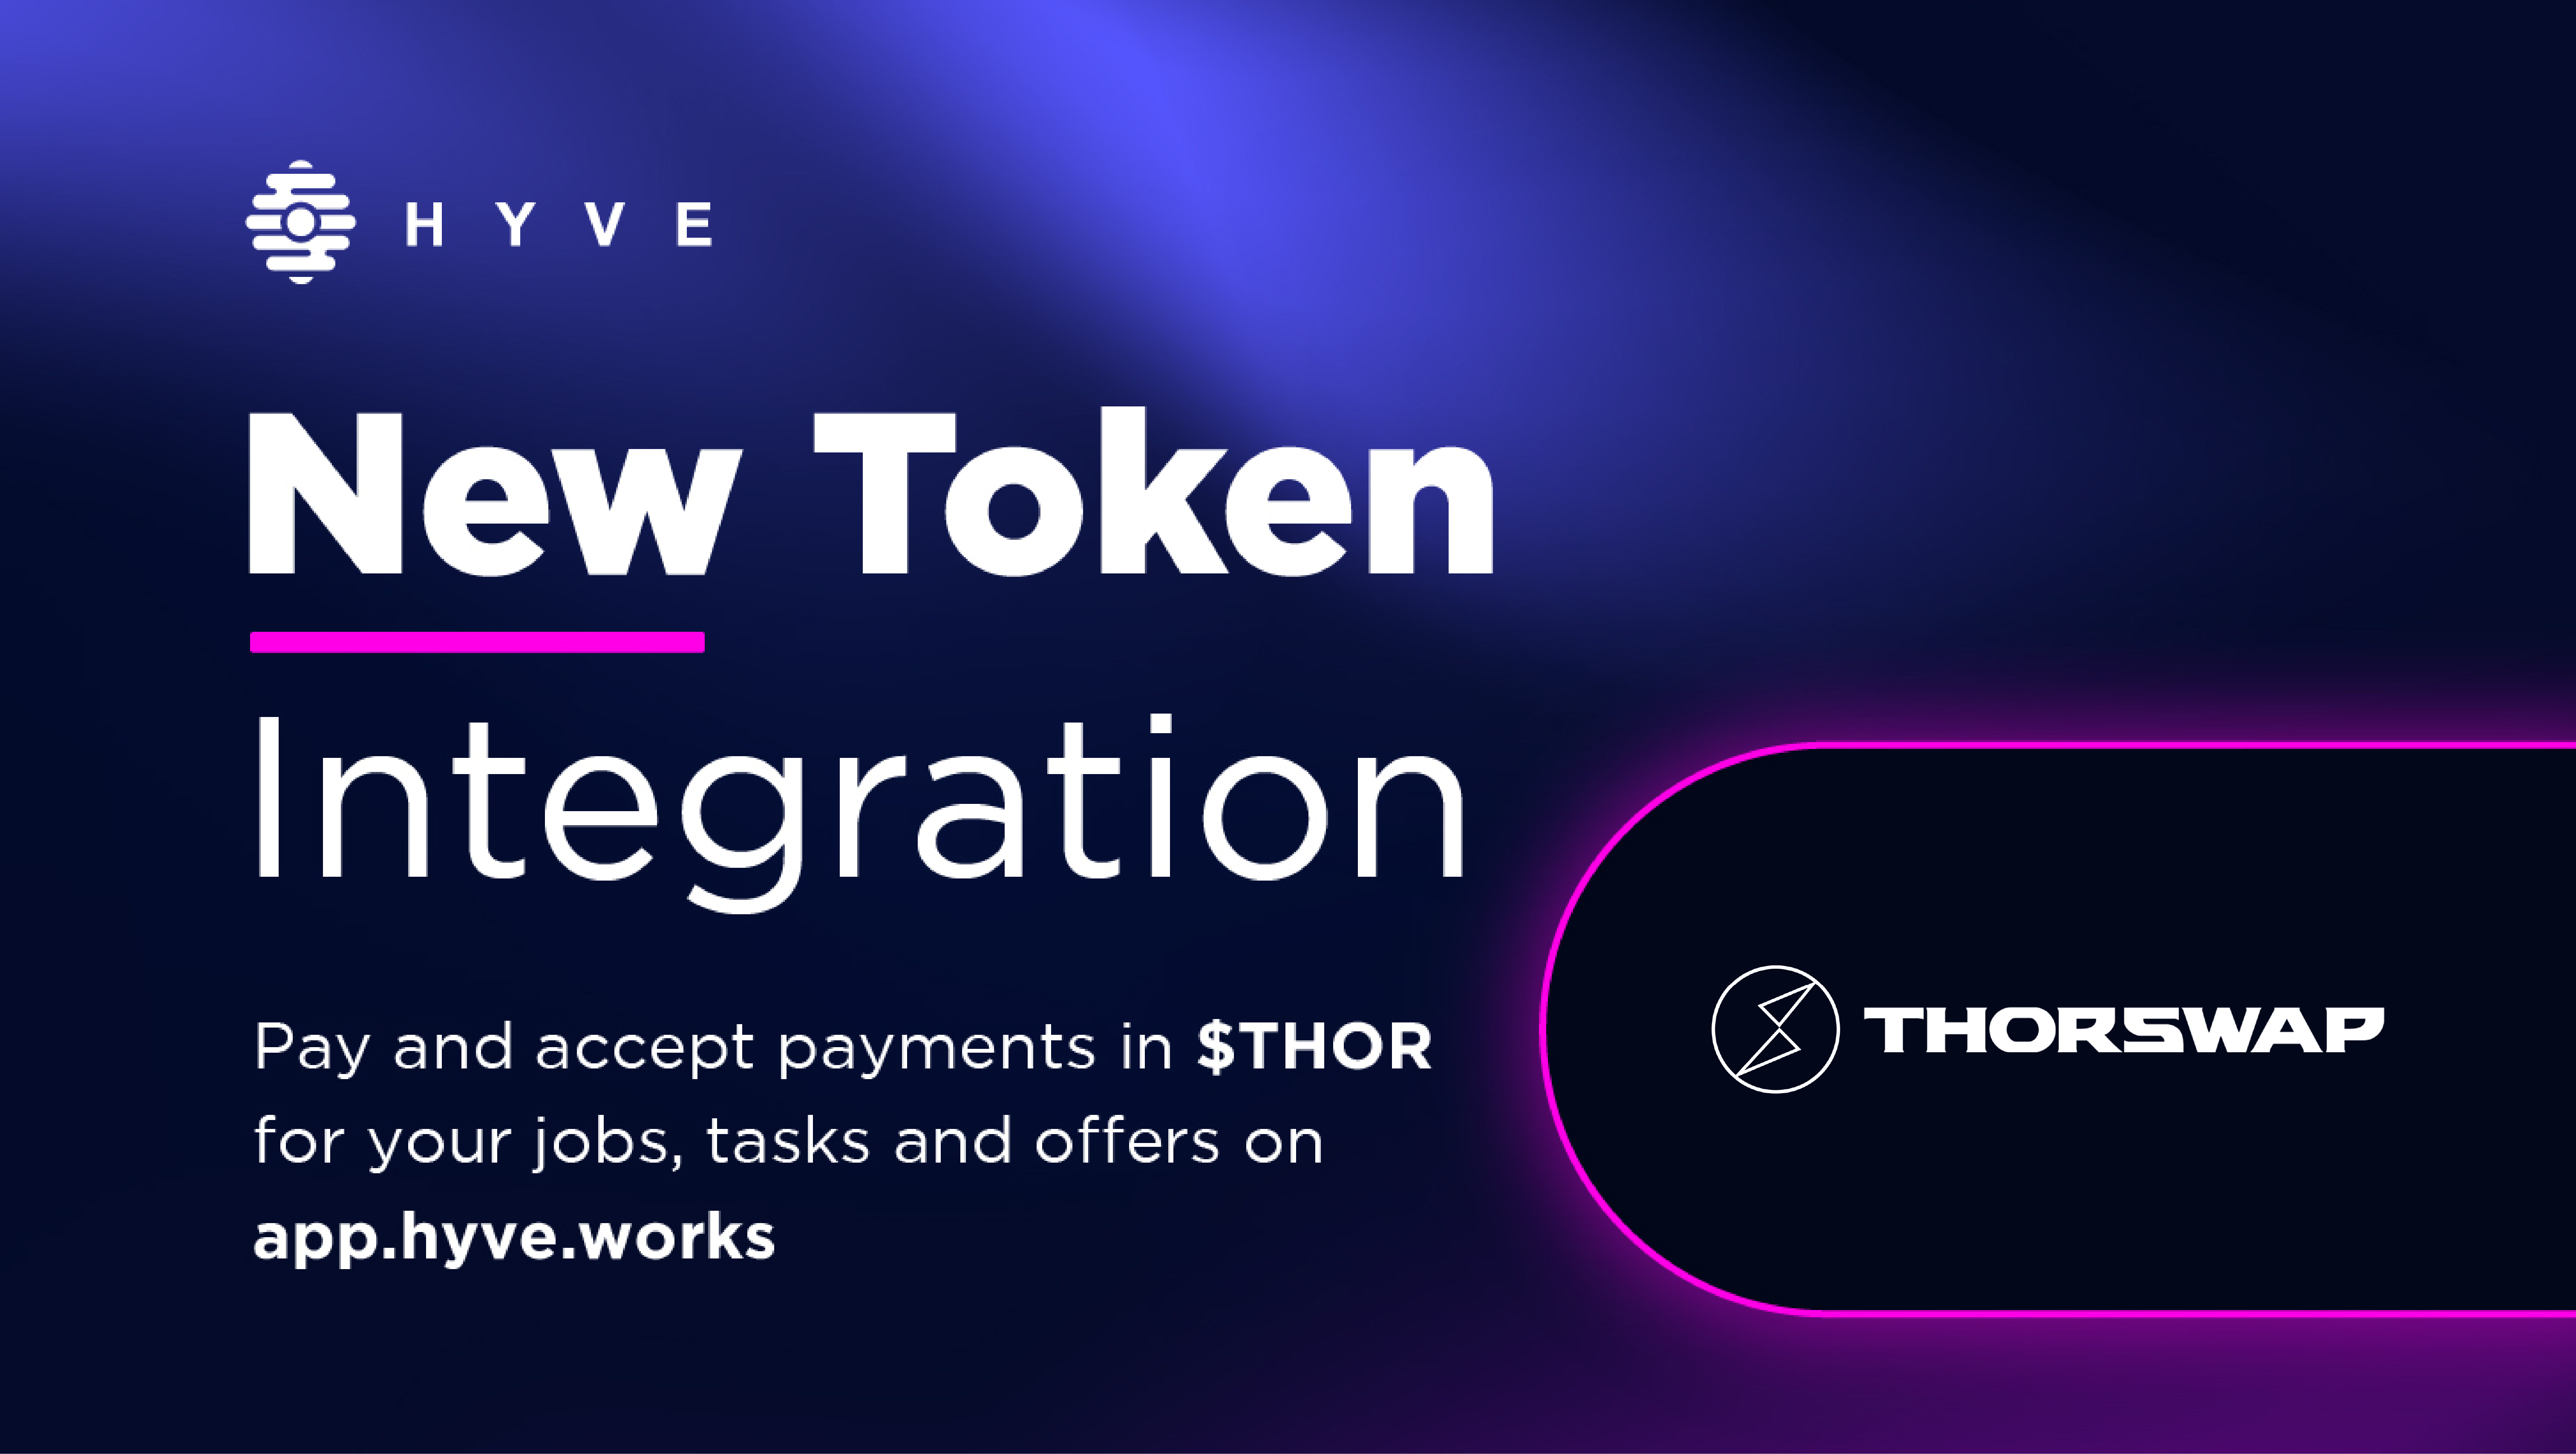 New token integration: introducing $THOR